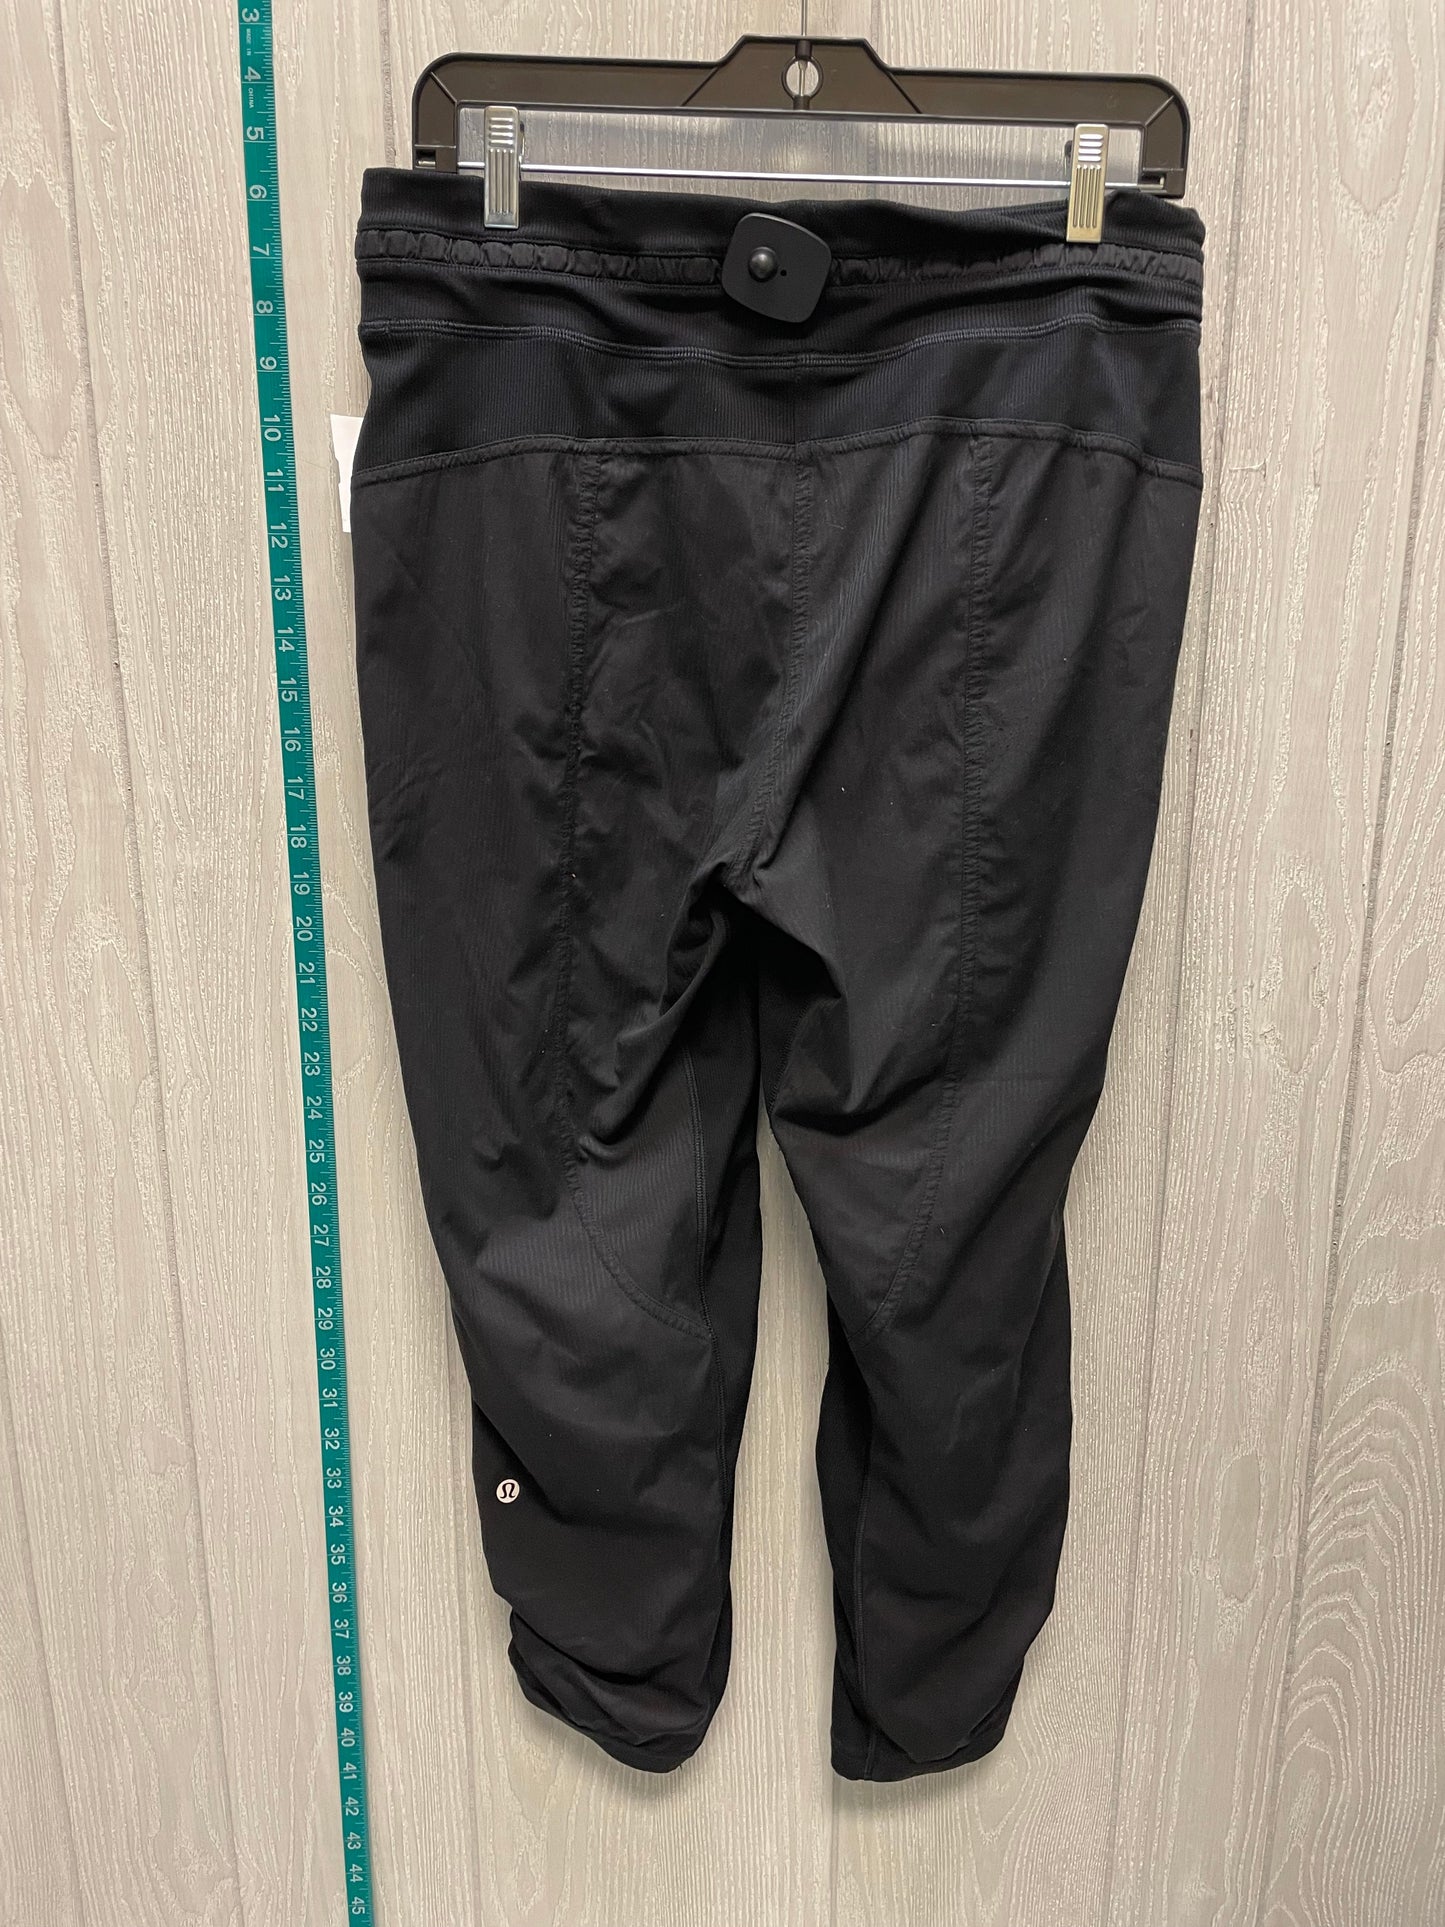 Black Athletic Pants Lululemon, Size S